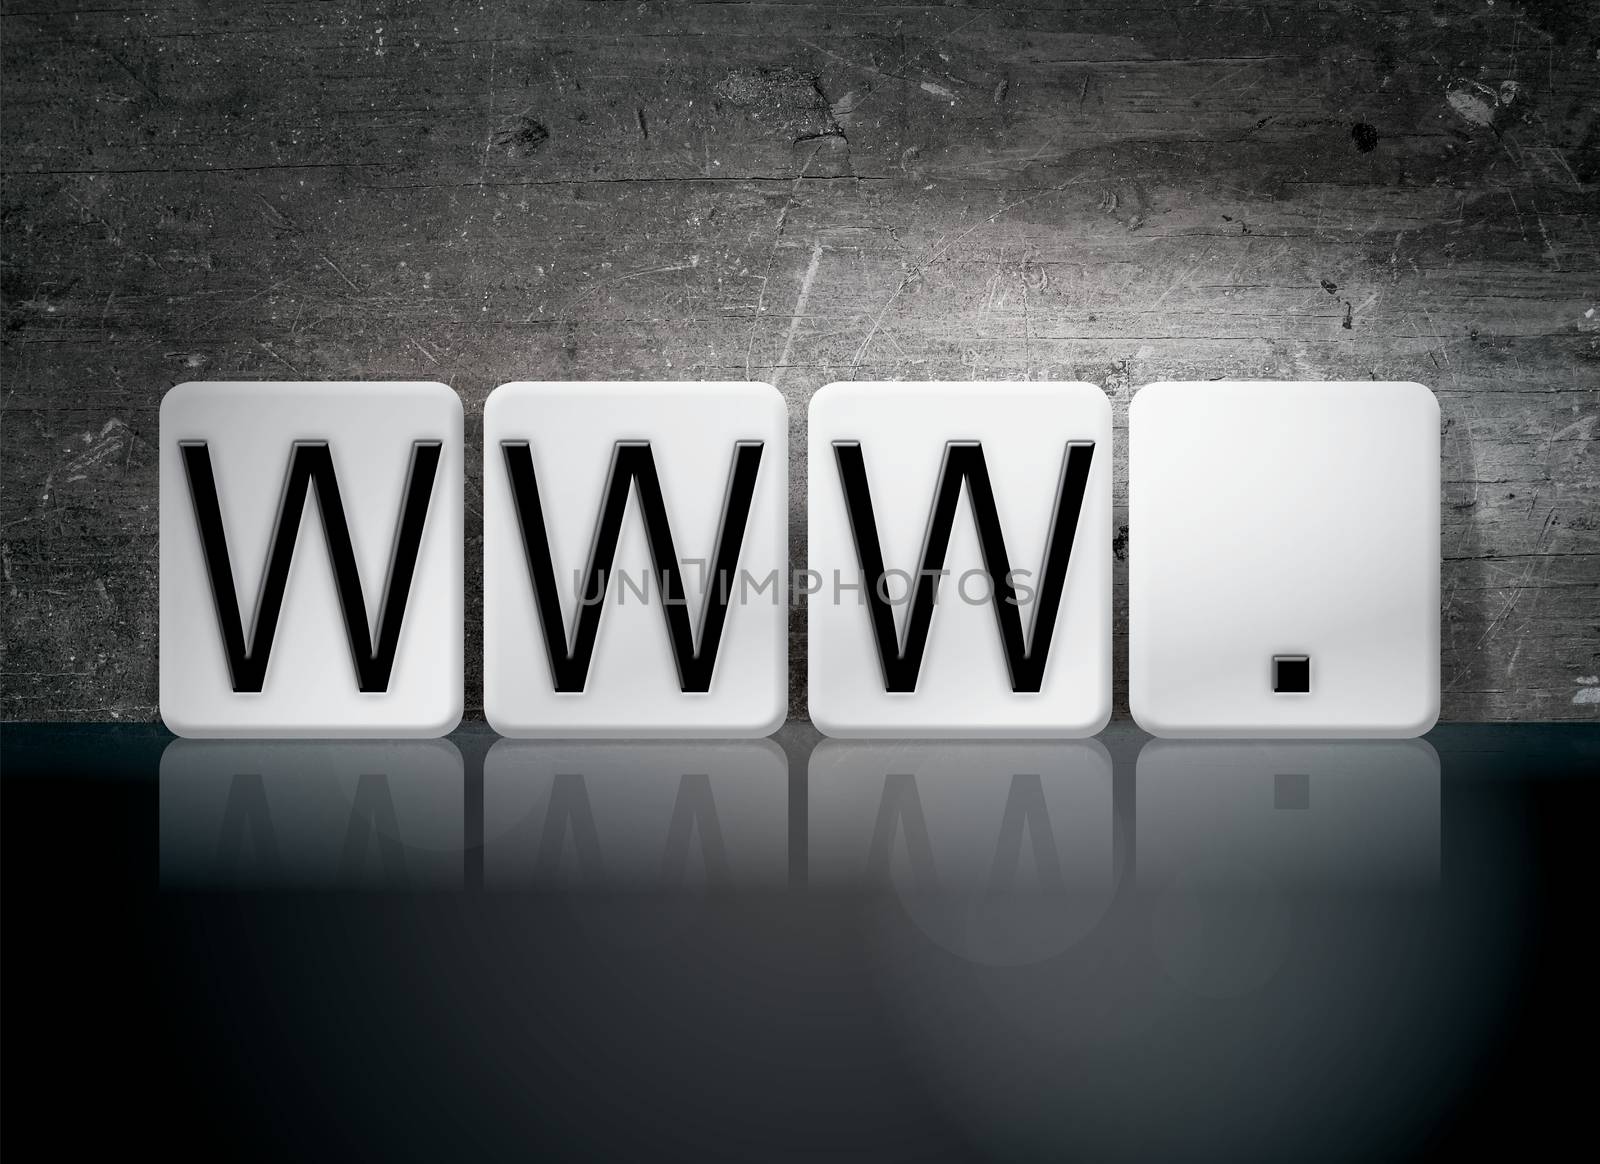 The word "www." written in white tiles against a dark vintage grunge background.